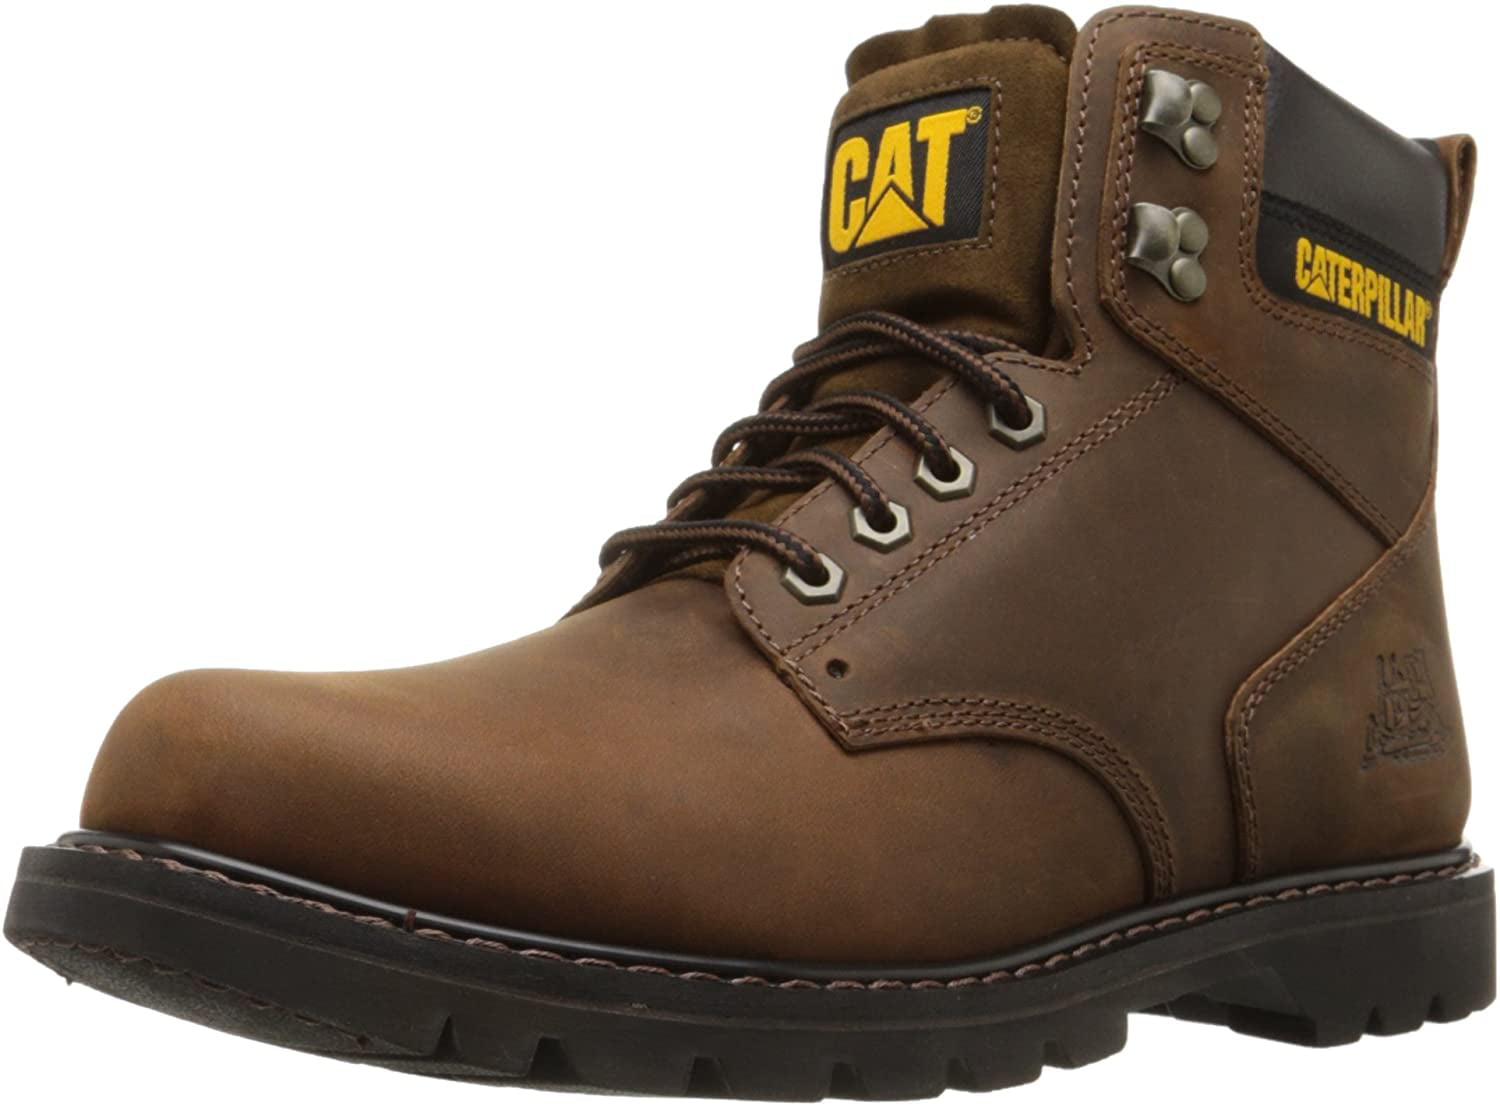 Cat Footwear Men's Second Shift Work Boot 